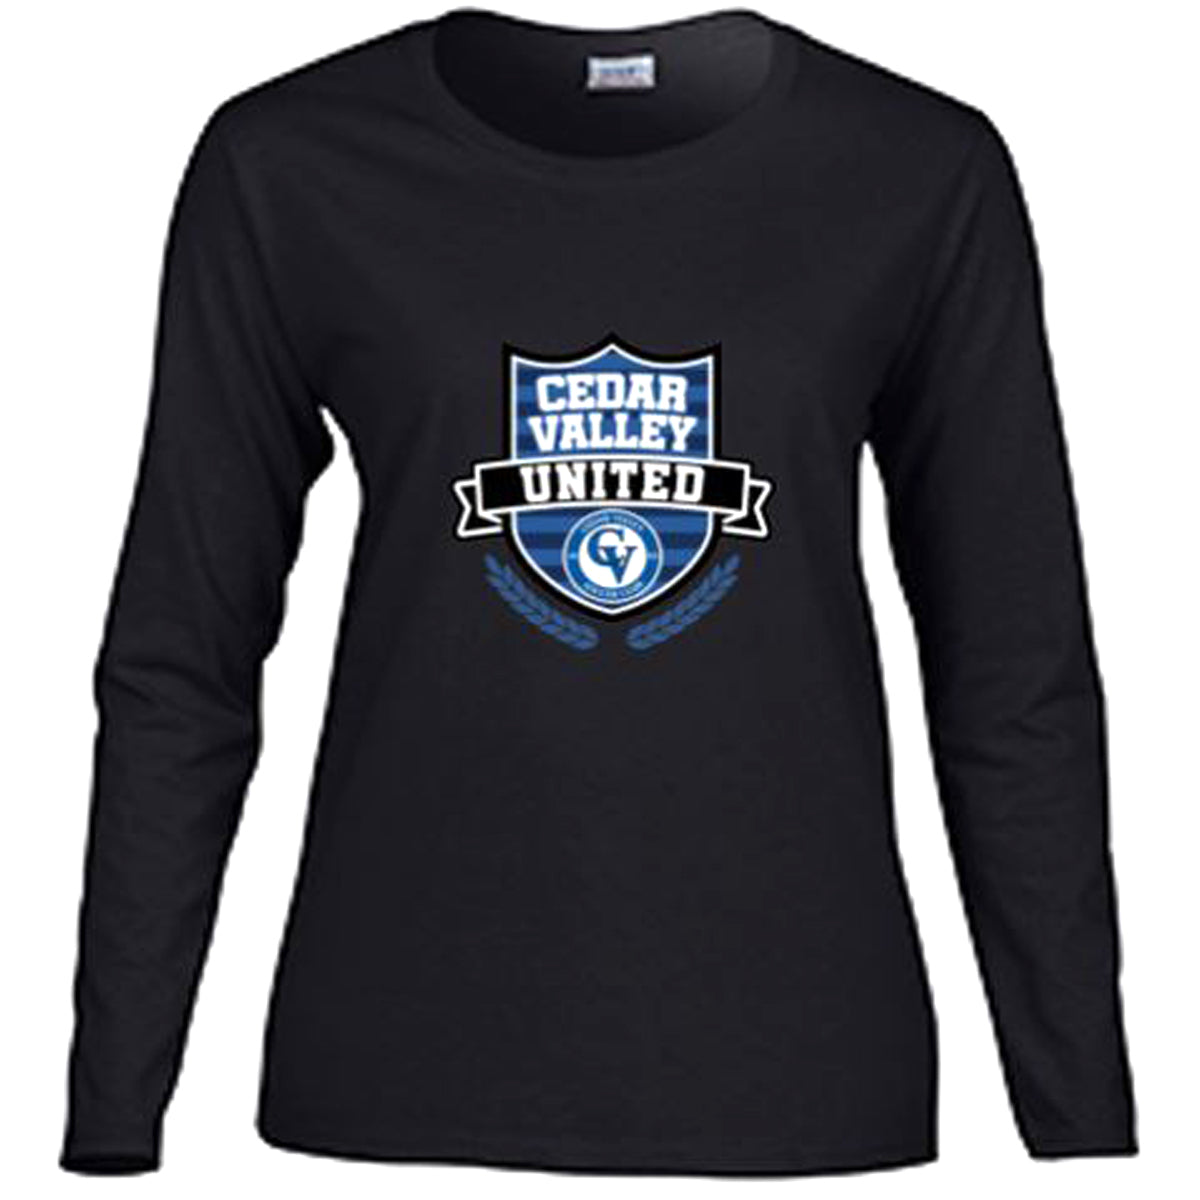 Cedar Valley Soccer Club Ladies&#39; Heavy Cotton 5.3 Oz. Long-Sleeve T-Shirt Long Sleeve T-Shirt Gildan Ladies Small Black 